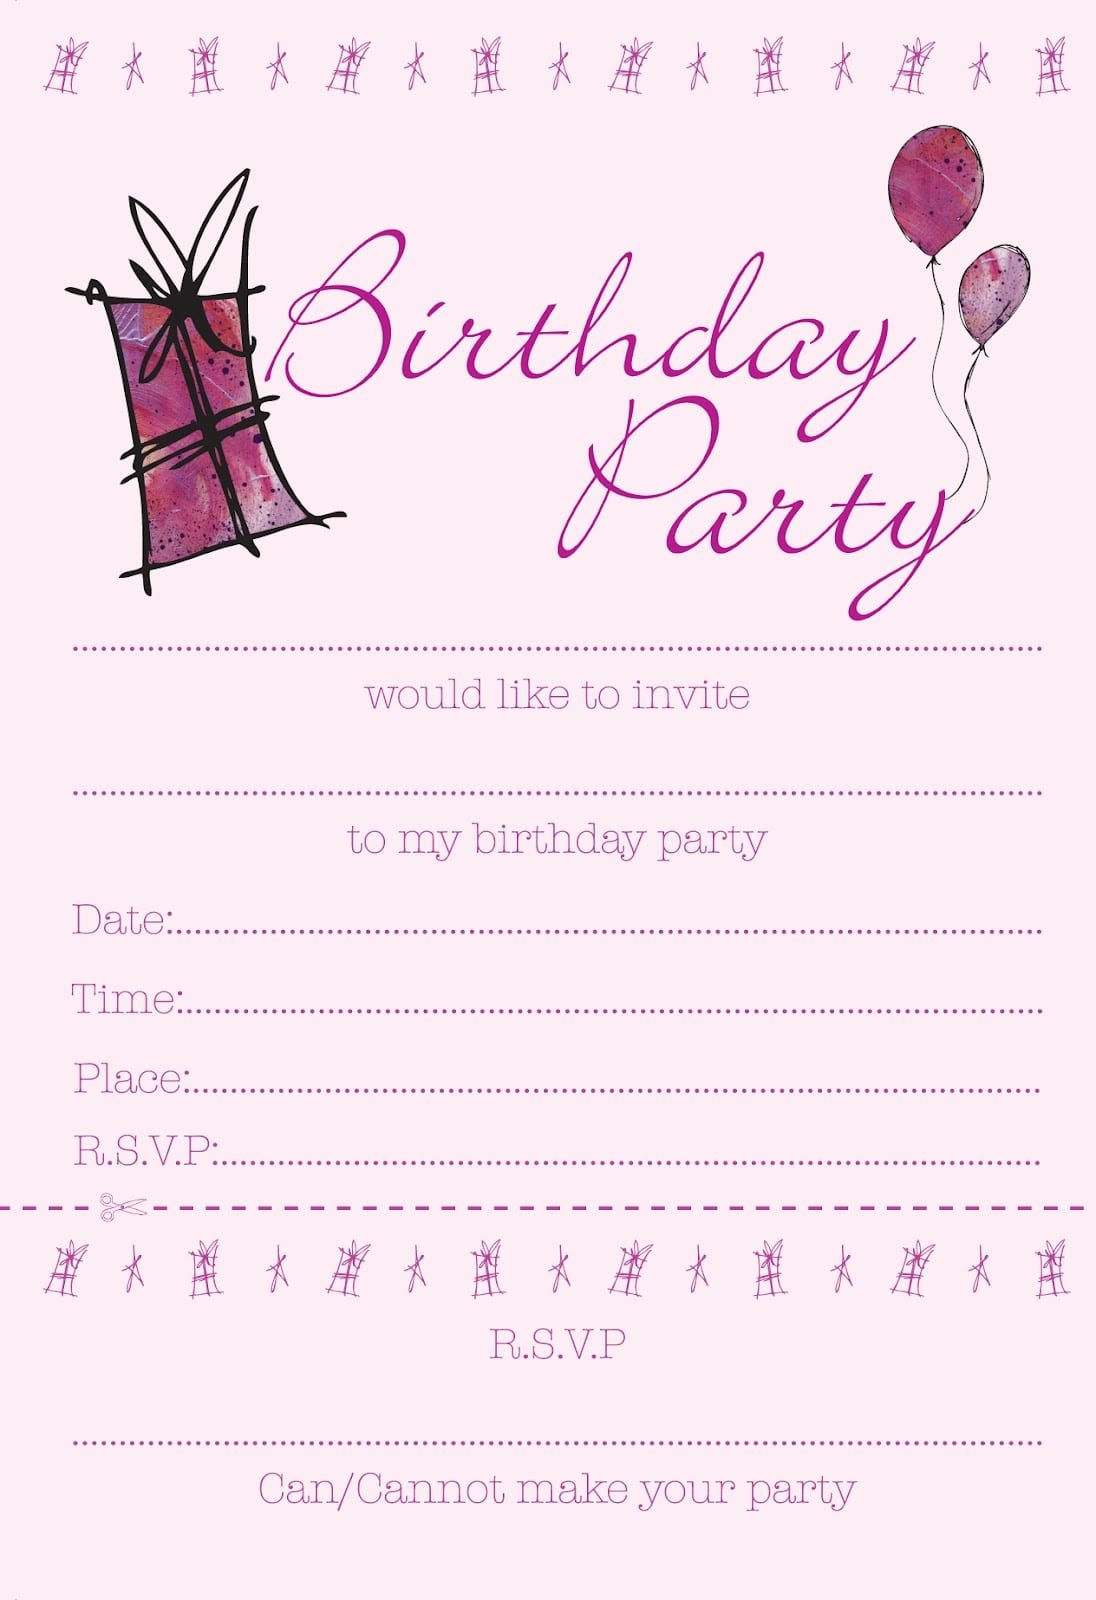 Top 10 Girls Birthday Party Invitations